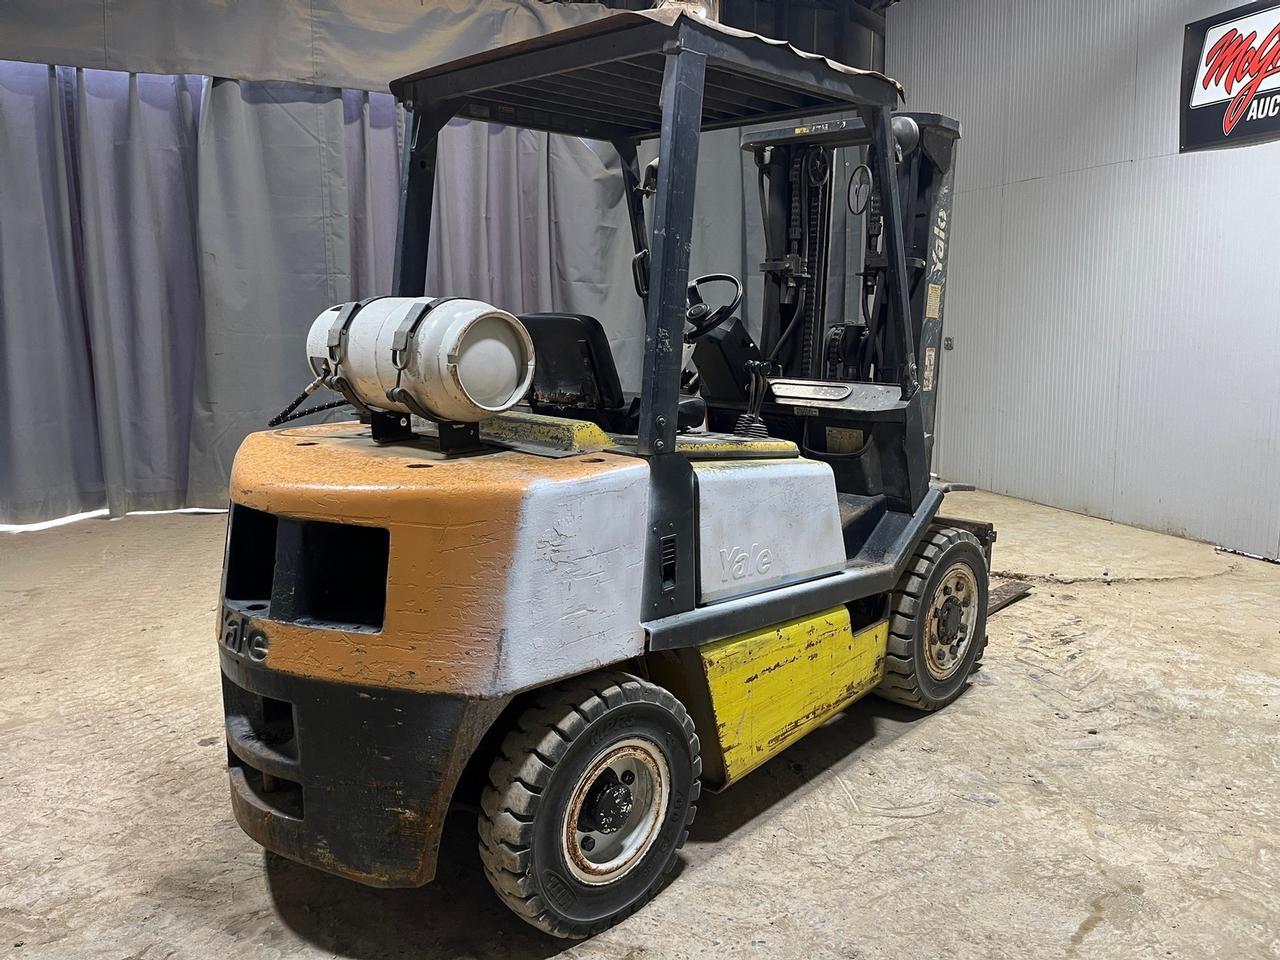 Yale GLP080 Forklift